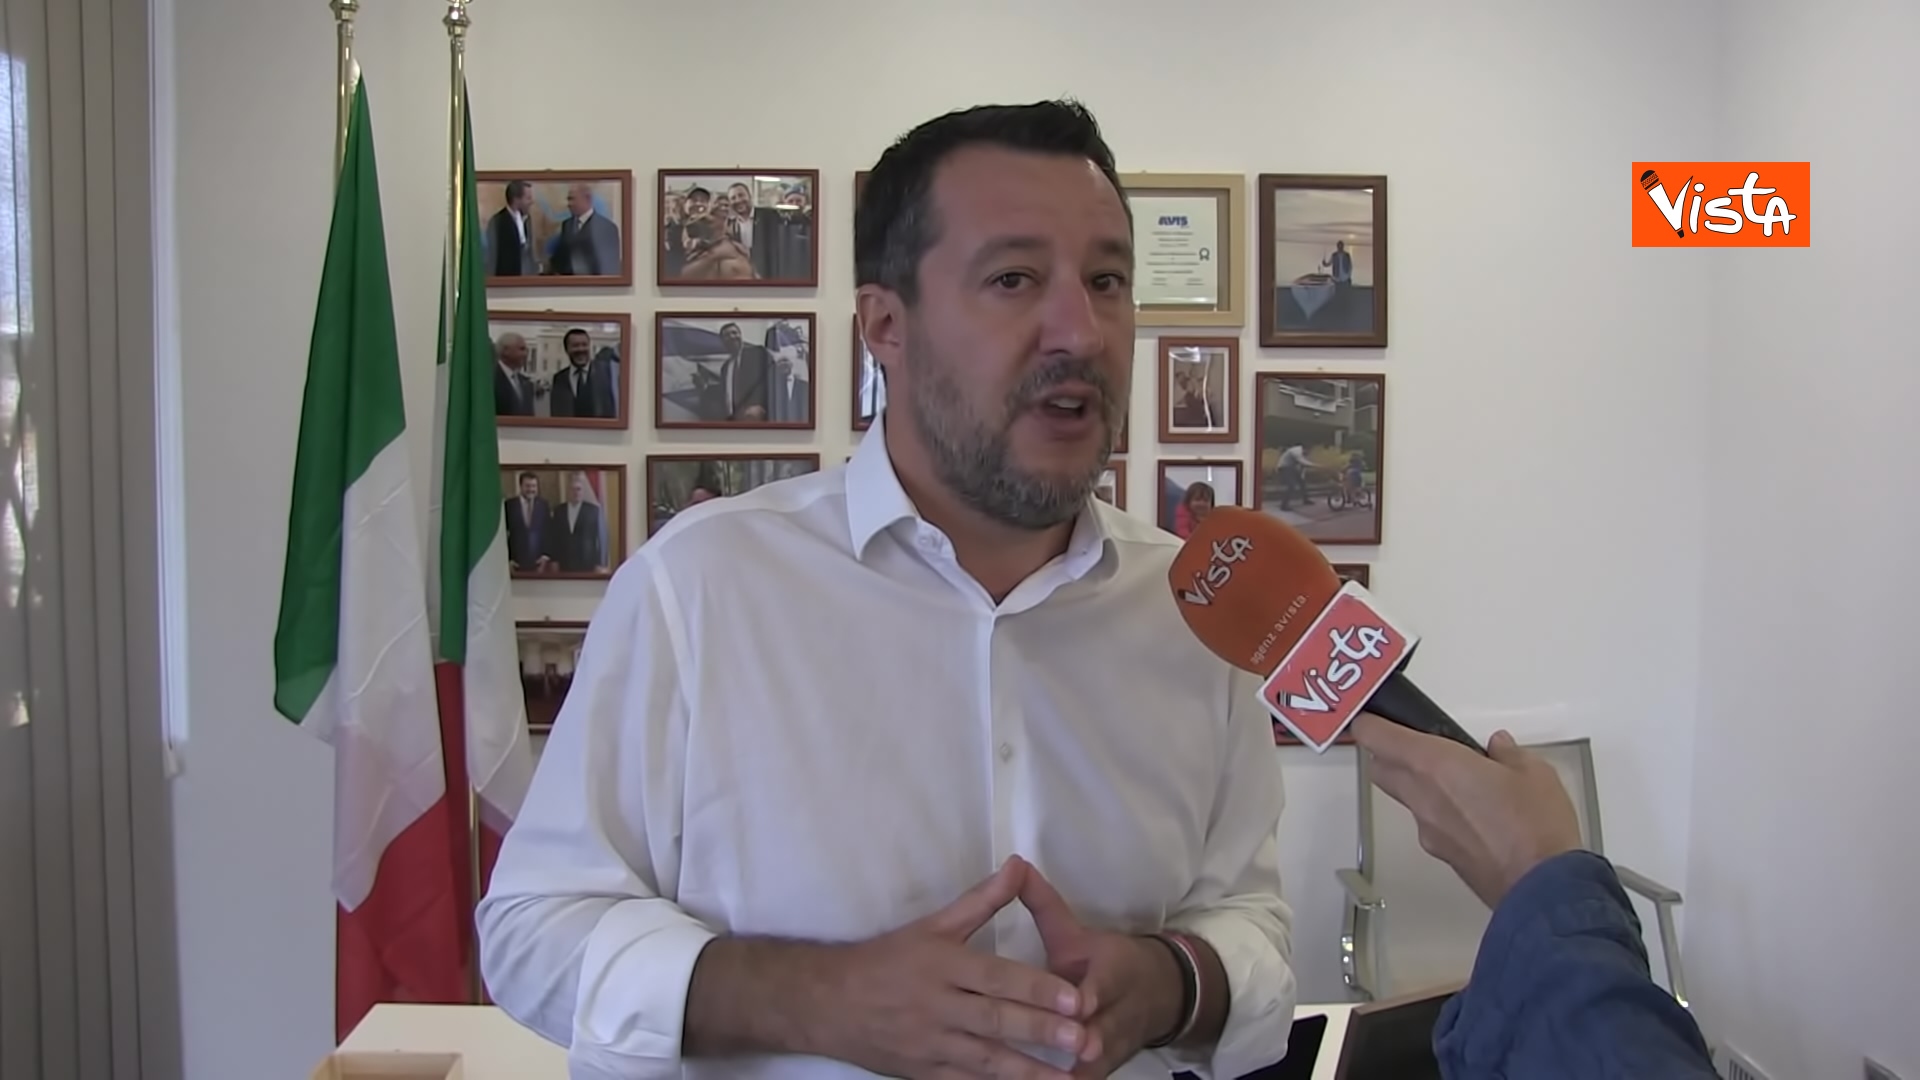 L'intervista a Matteo Salvini del direttore di Vista Alexander Jakhnagiev, le immagini